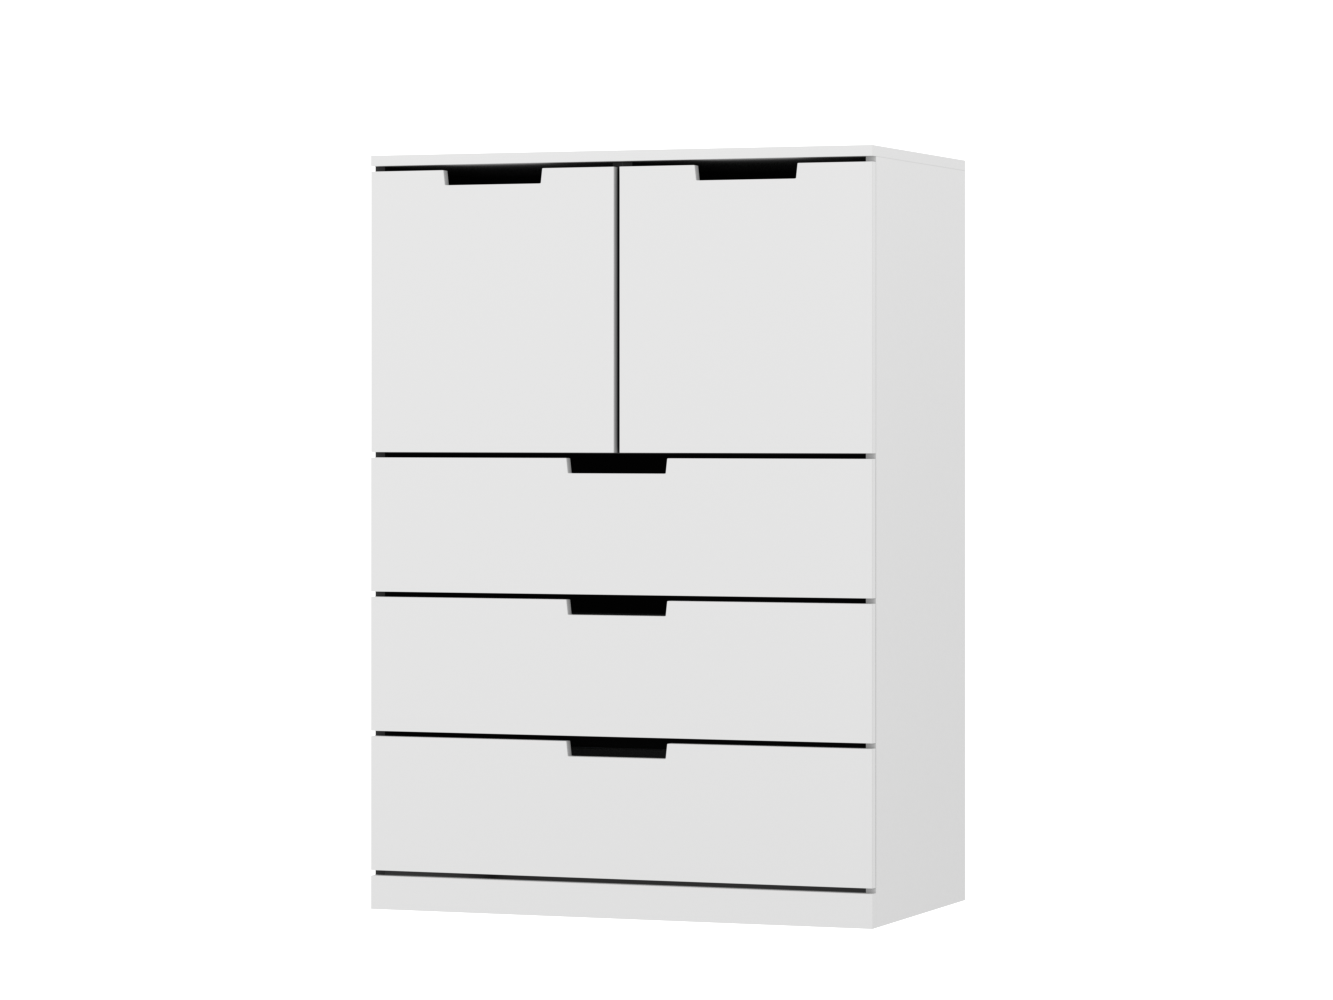 Изображение товара Комод Нордли 40 white ИКЕА (IKEA), 80x45x100 см на сайте adeta.ru